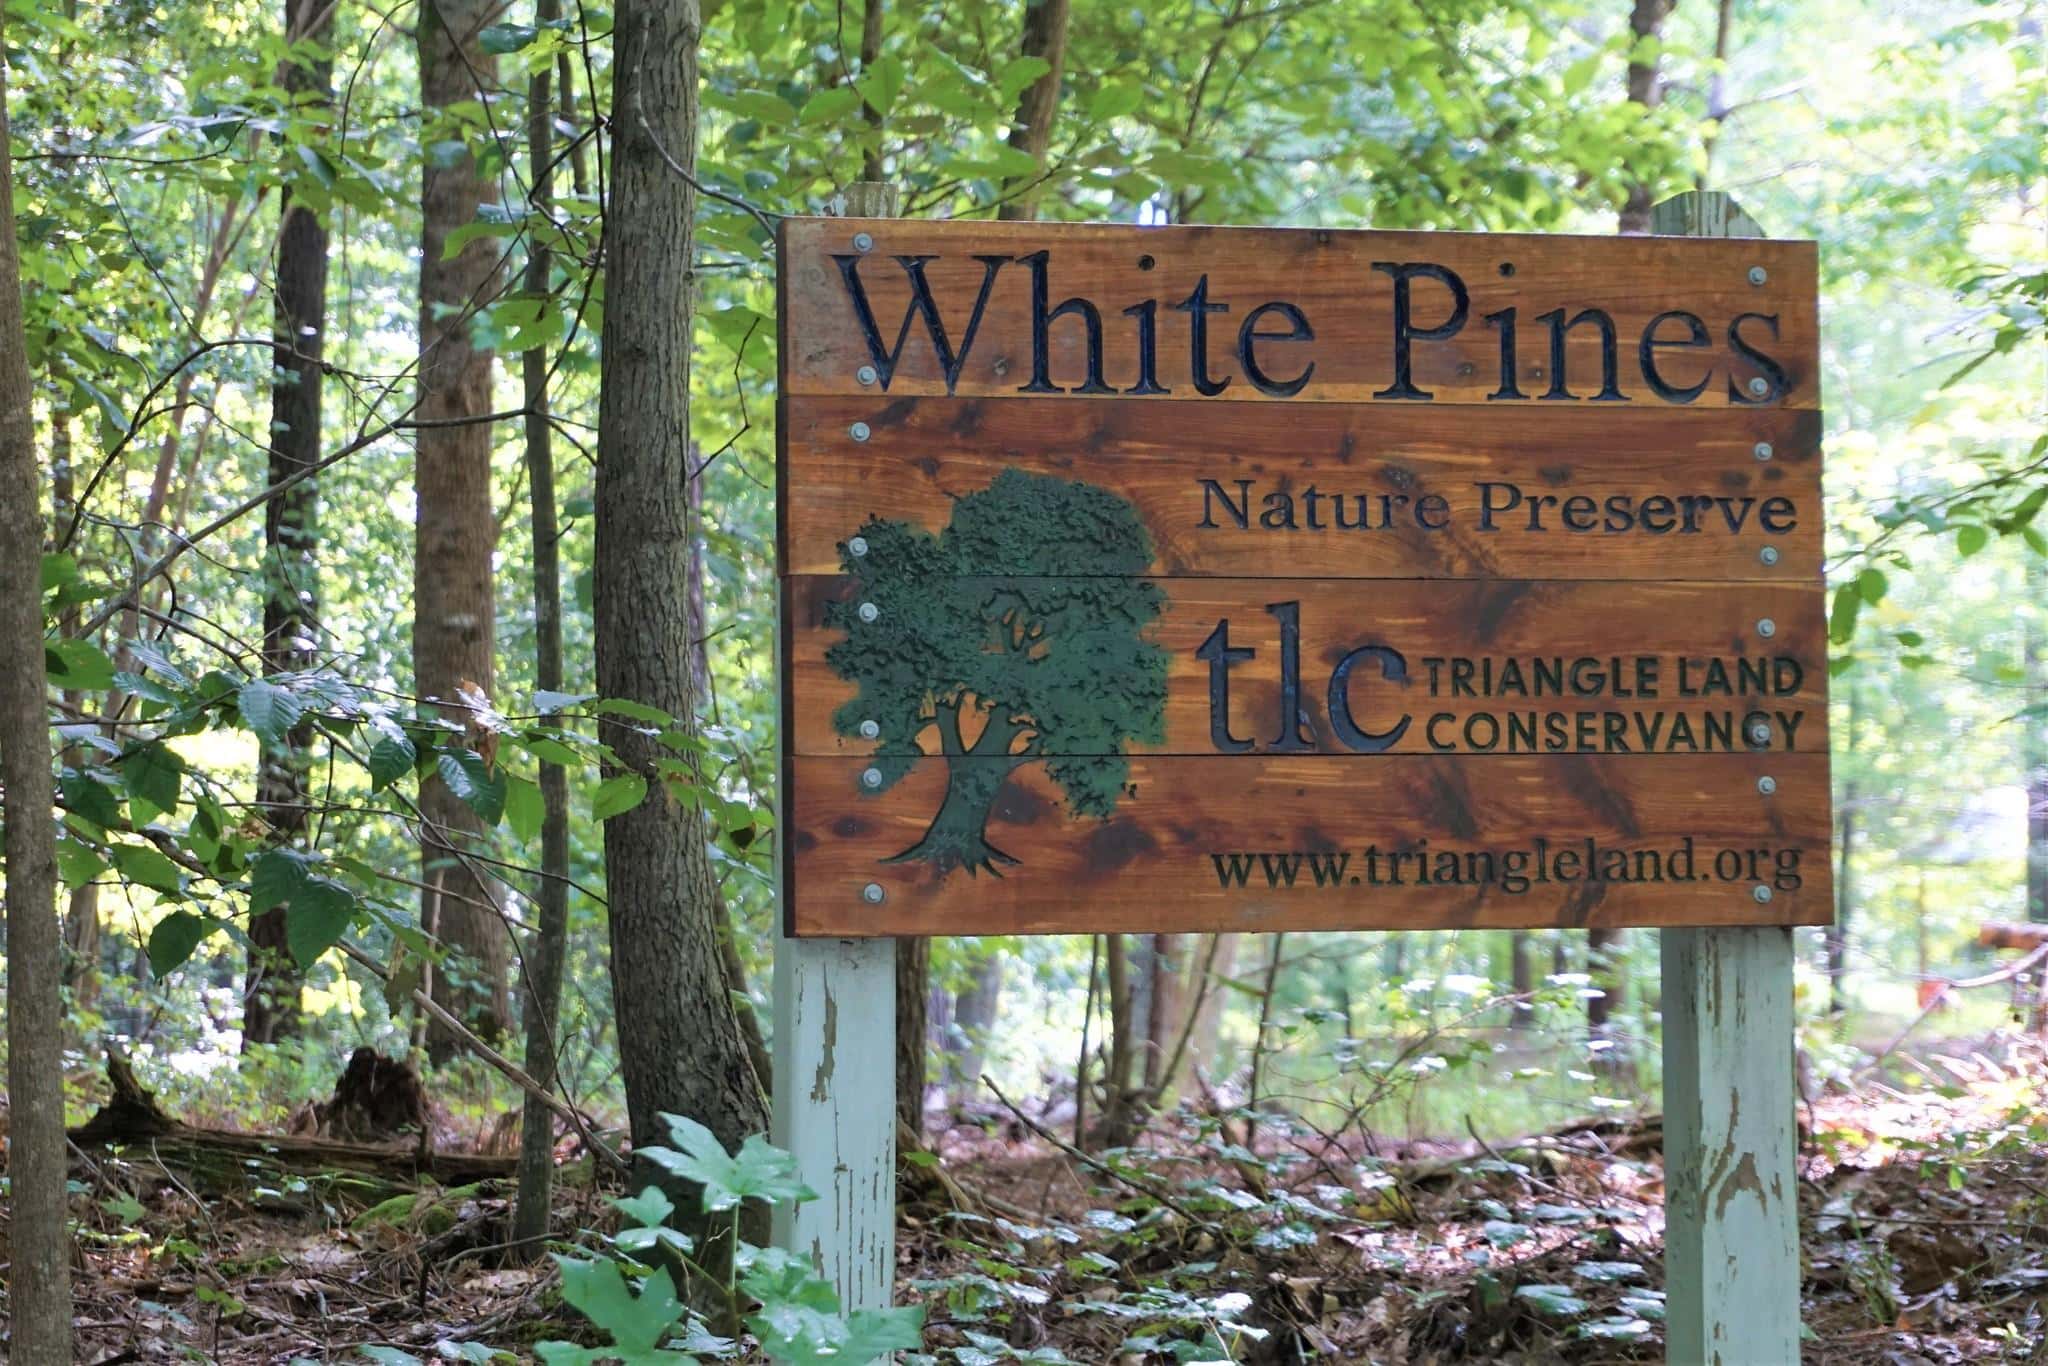 White Pines Nature Preserve